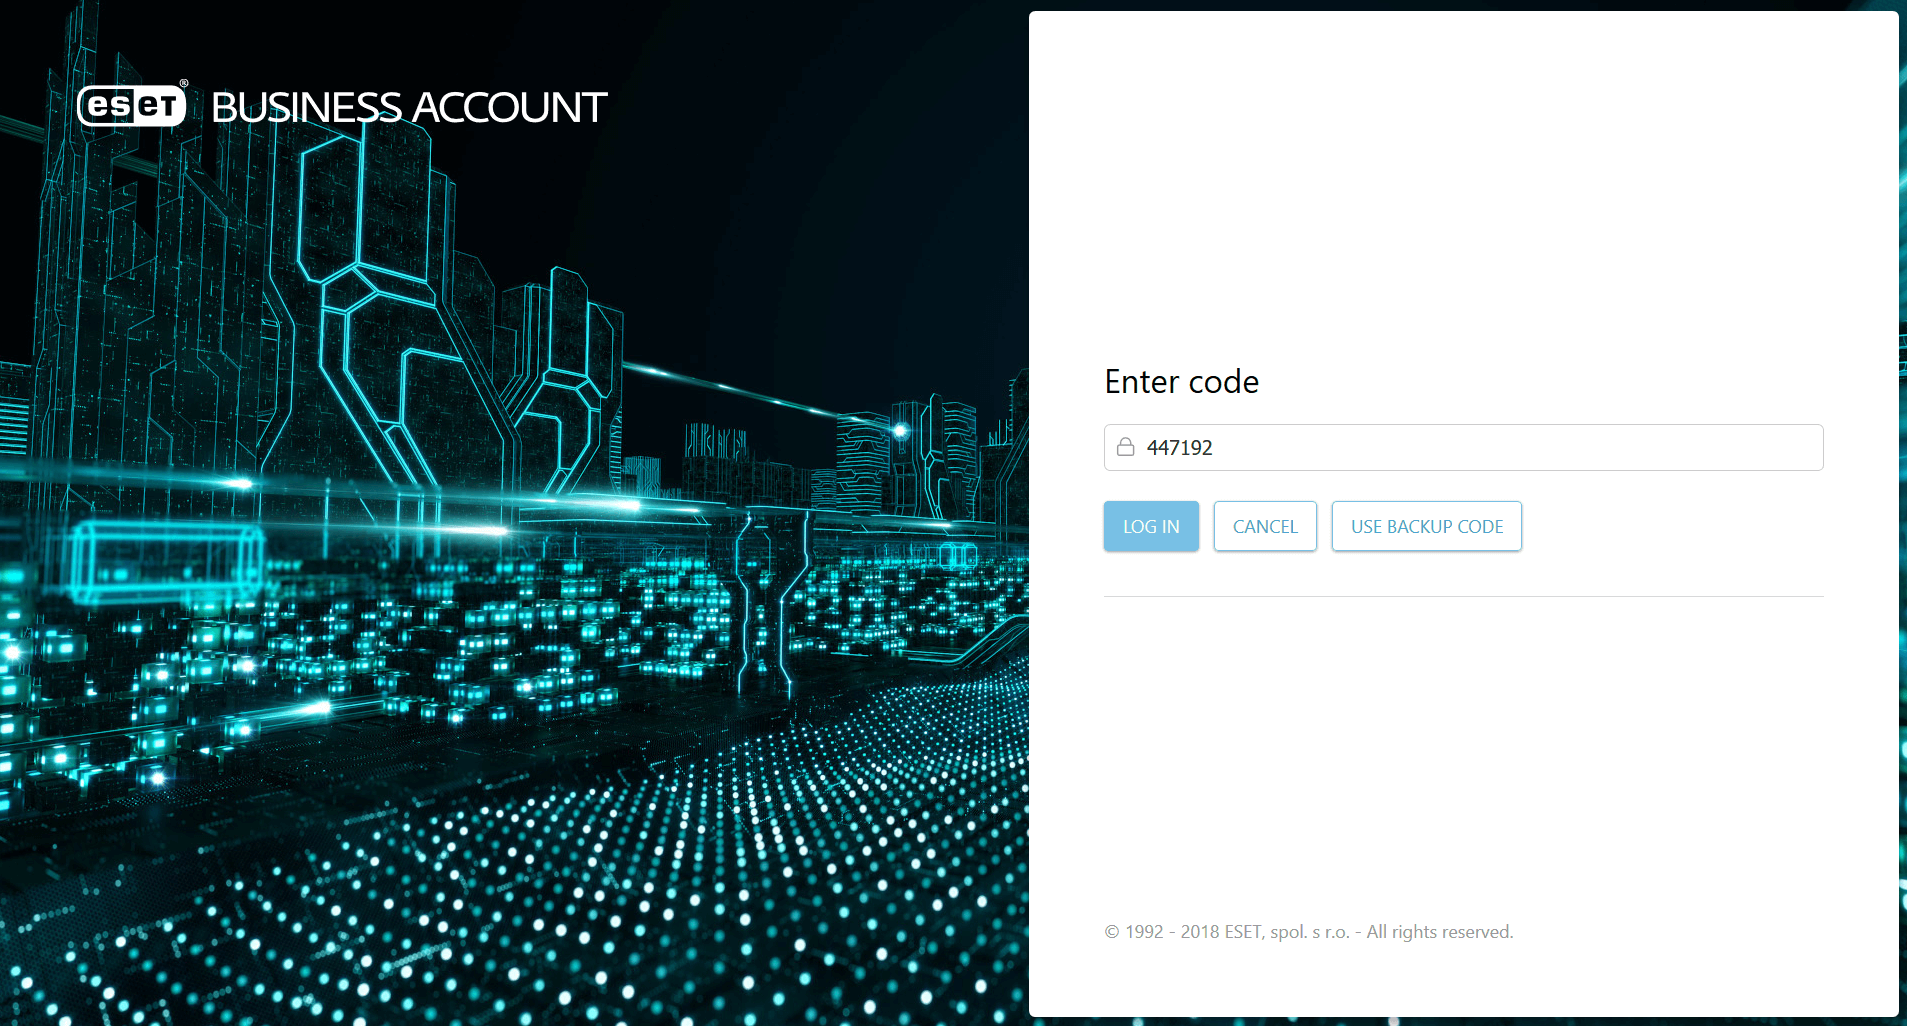 ESET Business Account